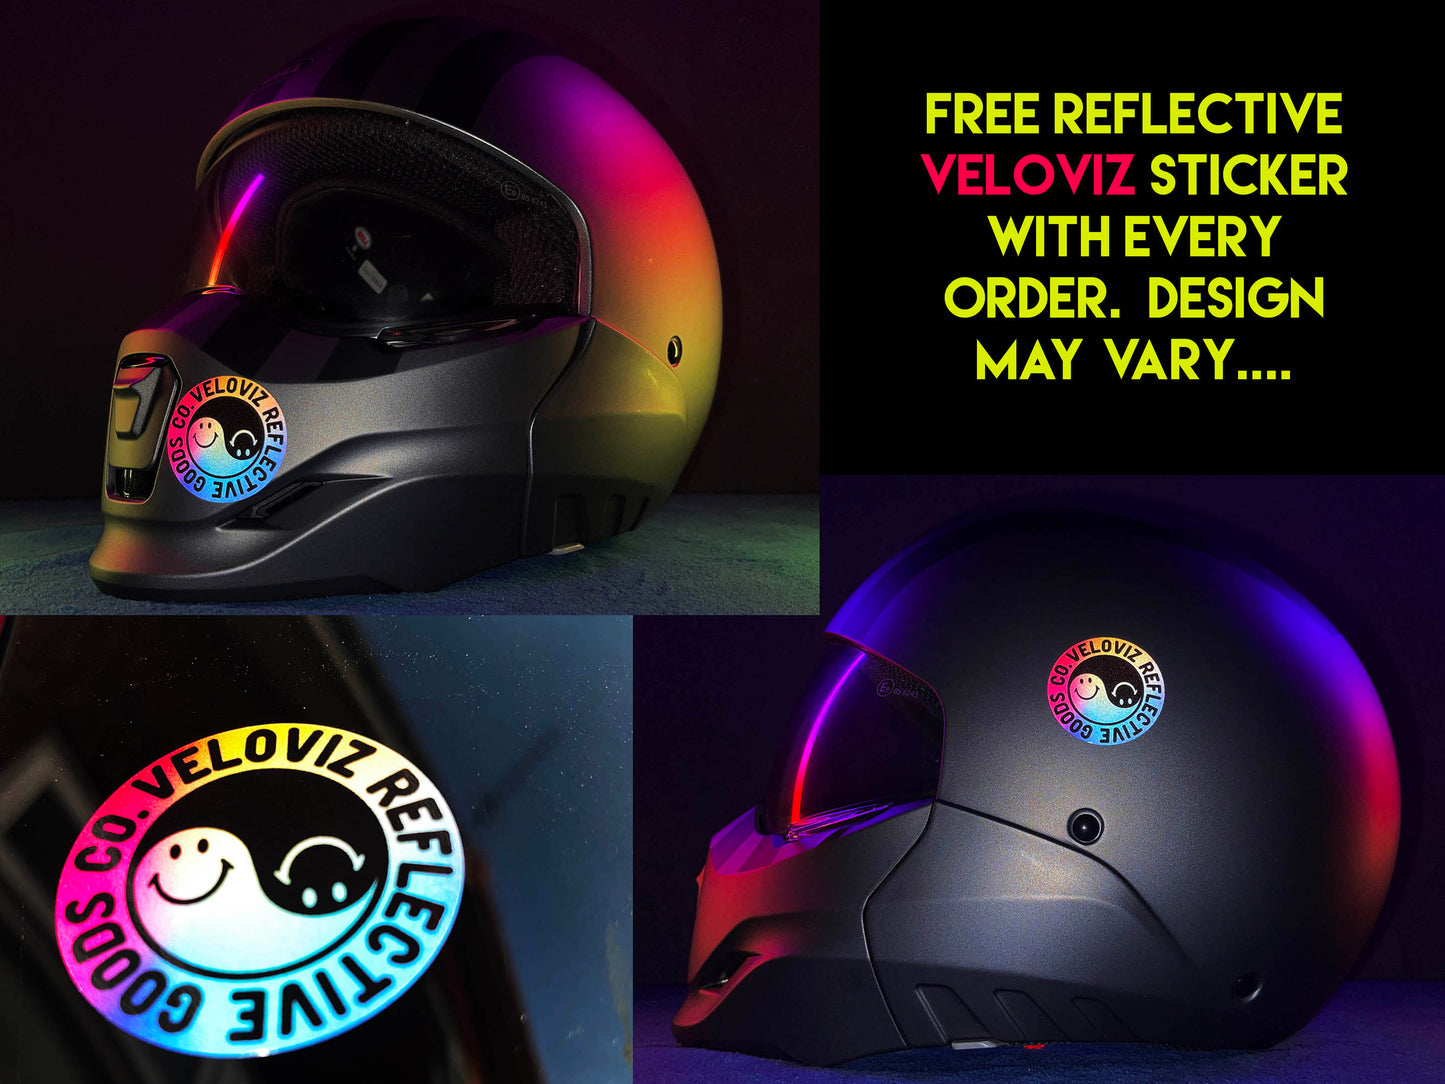 Valueviz Reflective 2 Inch Chevron Helmet Stickers